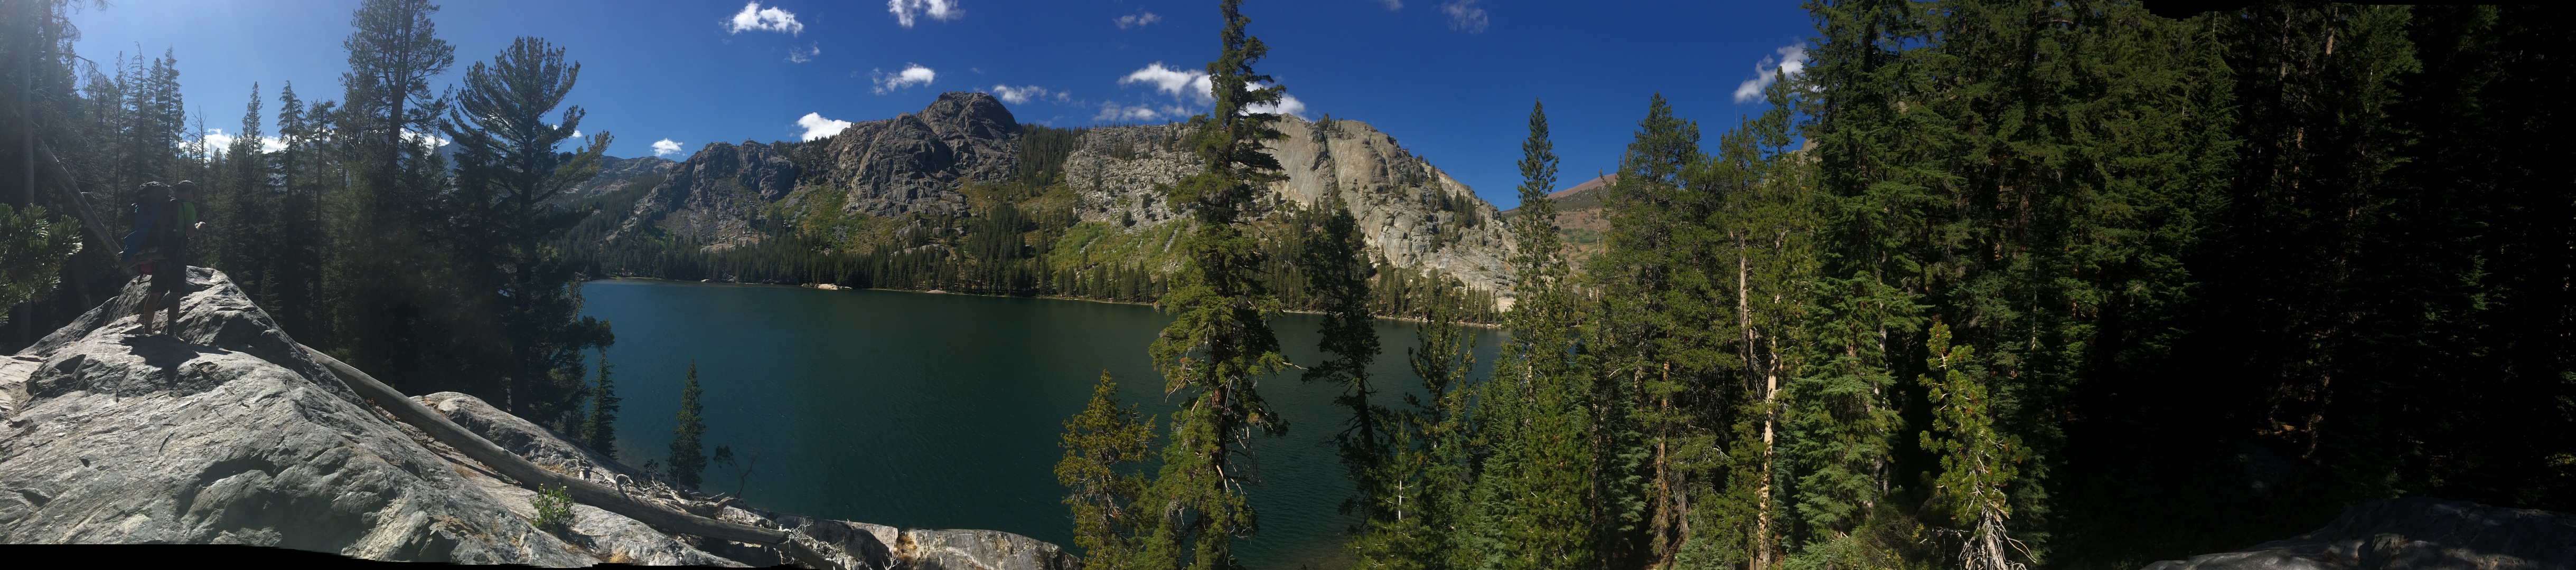 Shadow Lake john muir trail ansel adams wilderness tuolumne meadows 2016 trip report